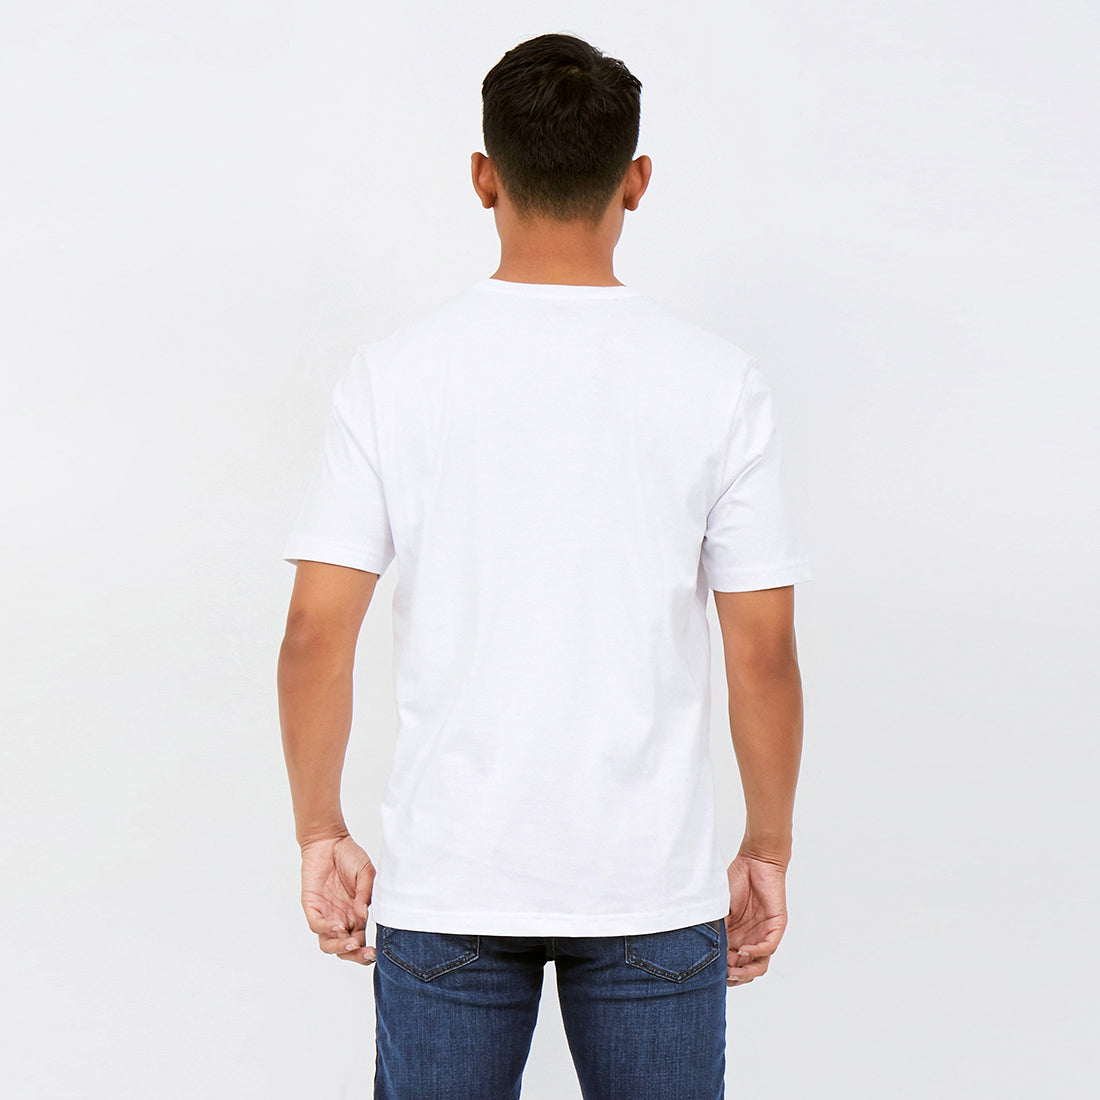 Carvil Tshirt Pria CUBE-WHT WHITE